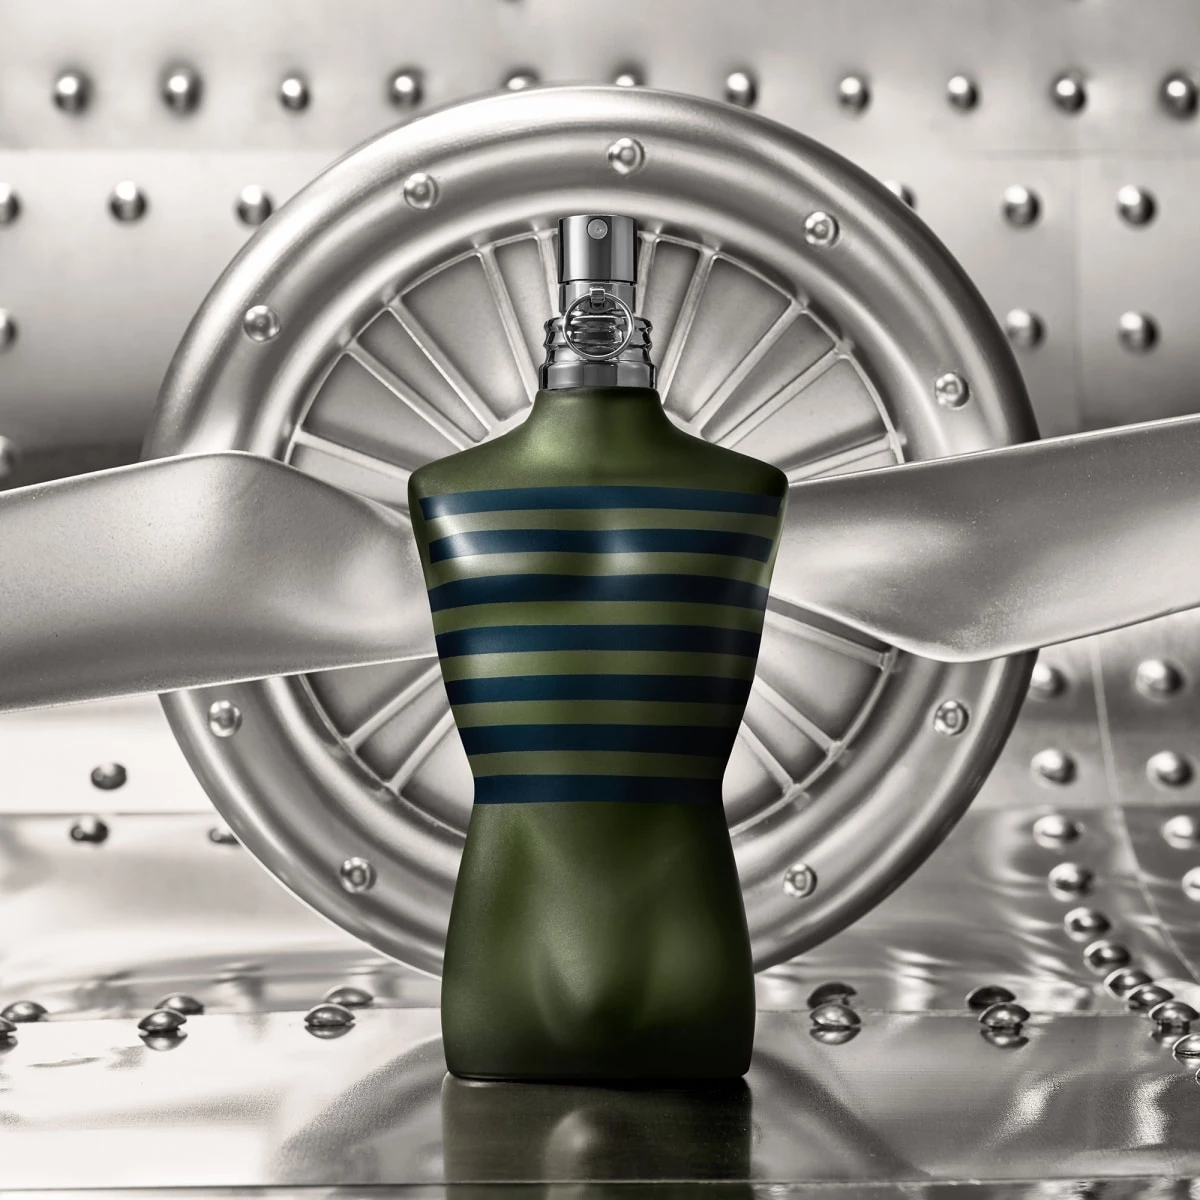 Jpg Le Male On Board - JPG Le Male 125ml Aftershave Lotion - Fragrance from ... / Creatorul acestui parfum este francis kurkdjian.